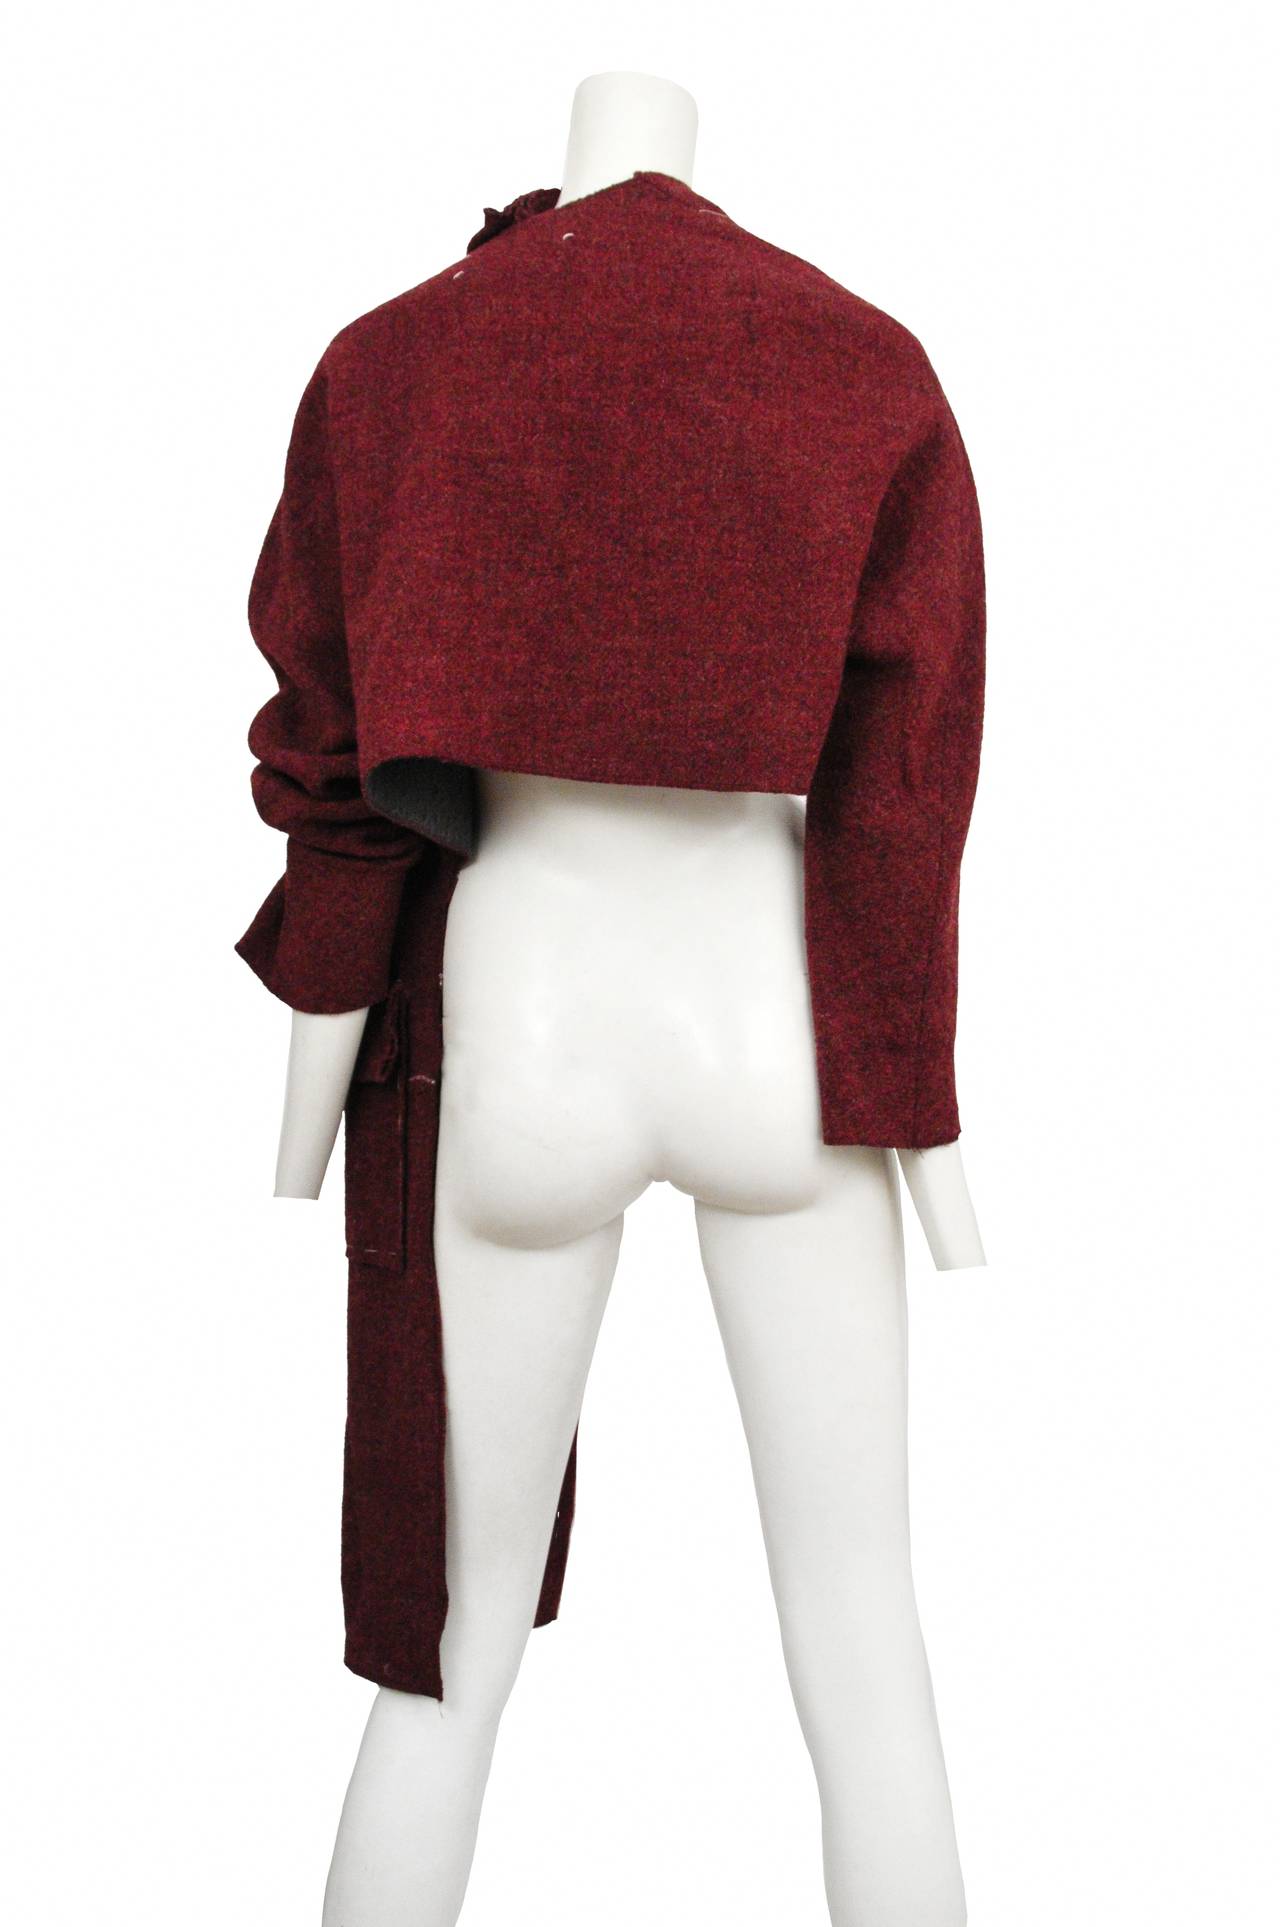 Vintage Maison Martin Margiela burgundy & grey wool half vest half coat with hand stitching. Circa 1997.